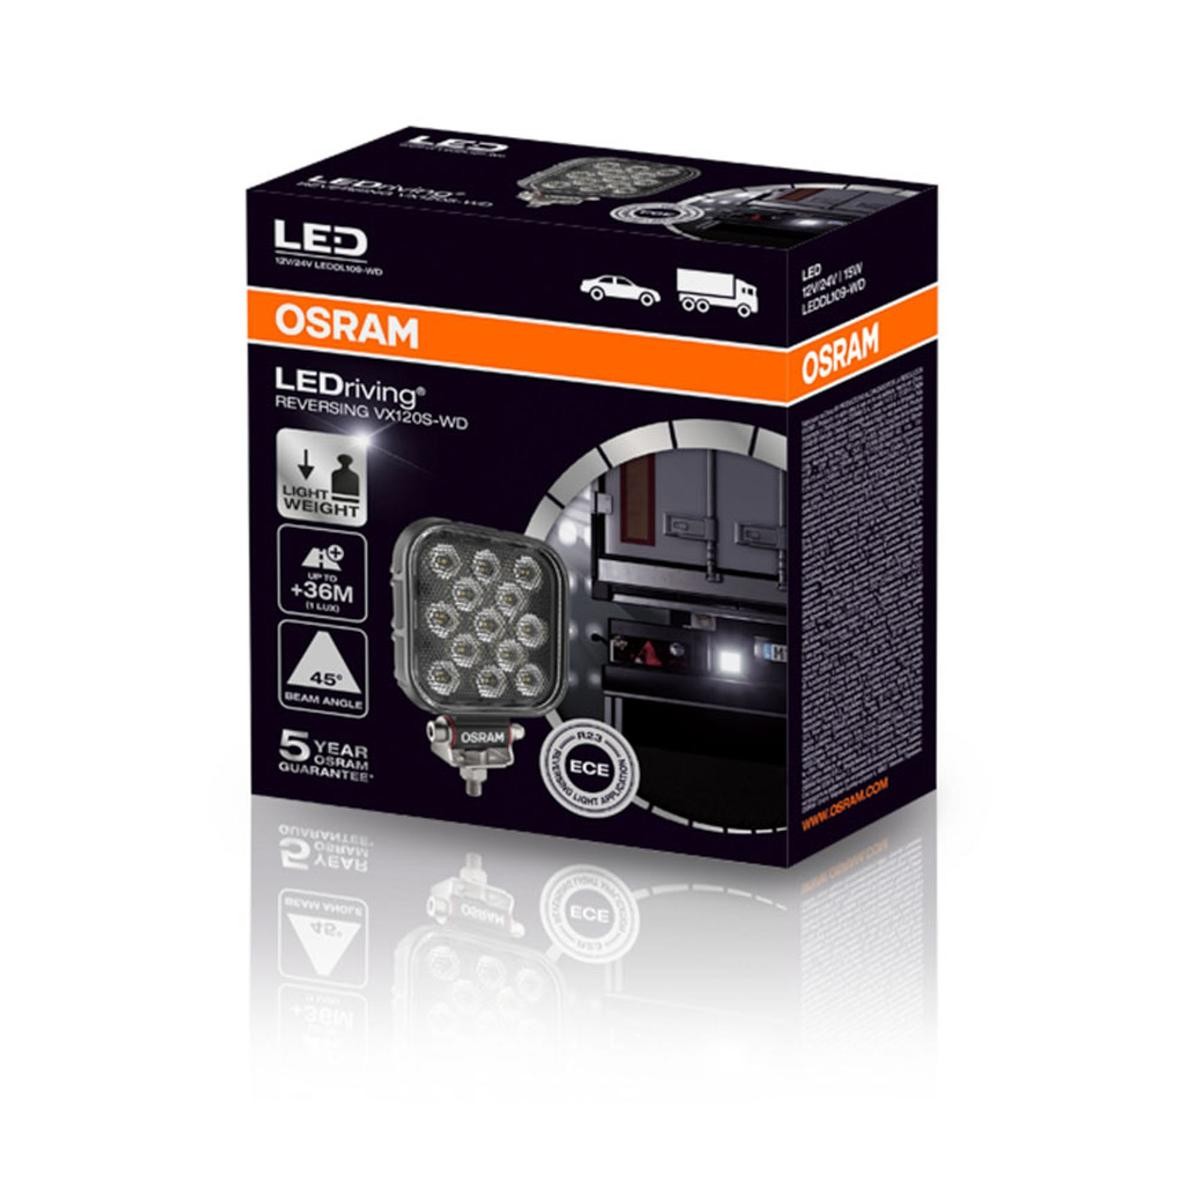 OSRAM LEDriving driving lights - Value Series LEDDL109WD Reverse lights Fiat 500 Convertible 1.4 100 hp Petrol 2018 price